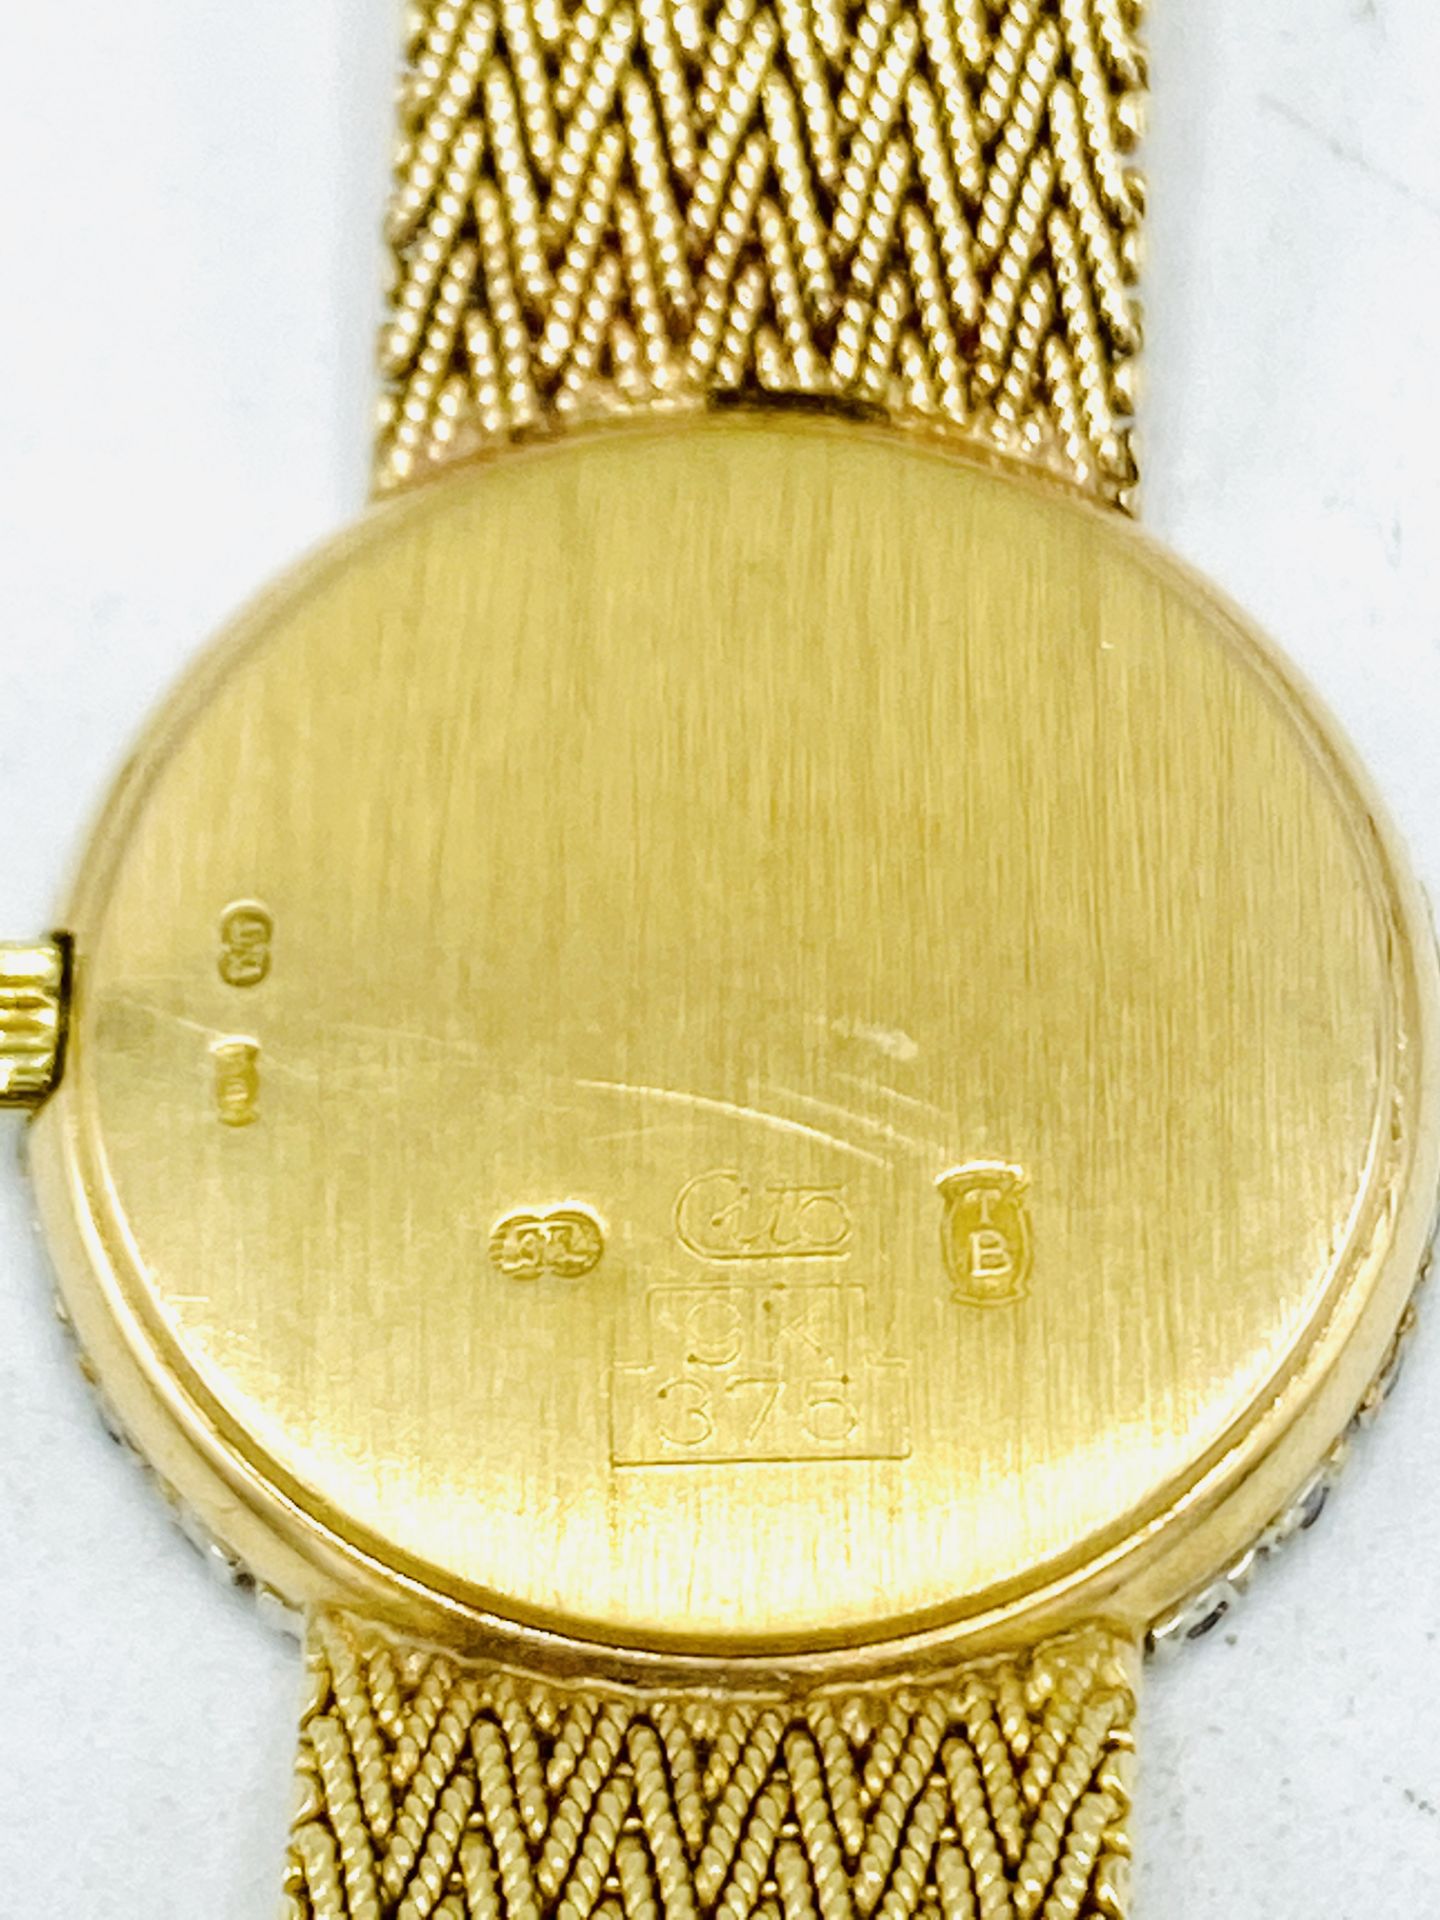 Bueche-Girod 9ct gold and diamond quartz wrist watch - Image 3 of 4